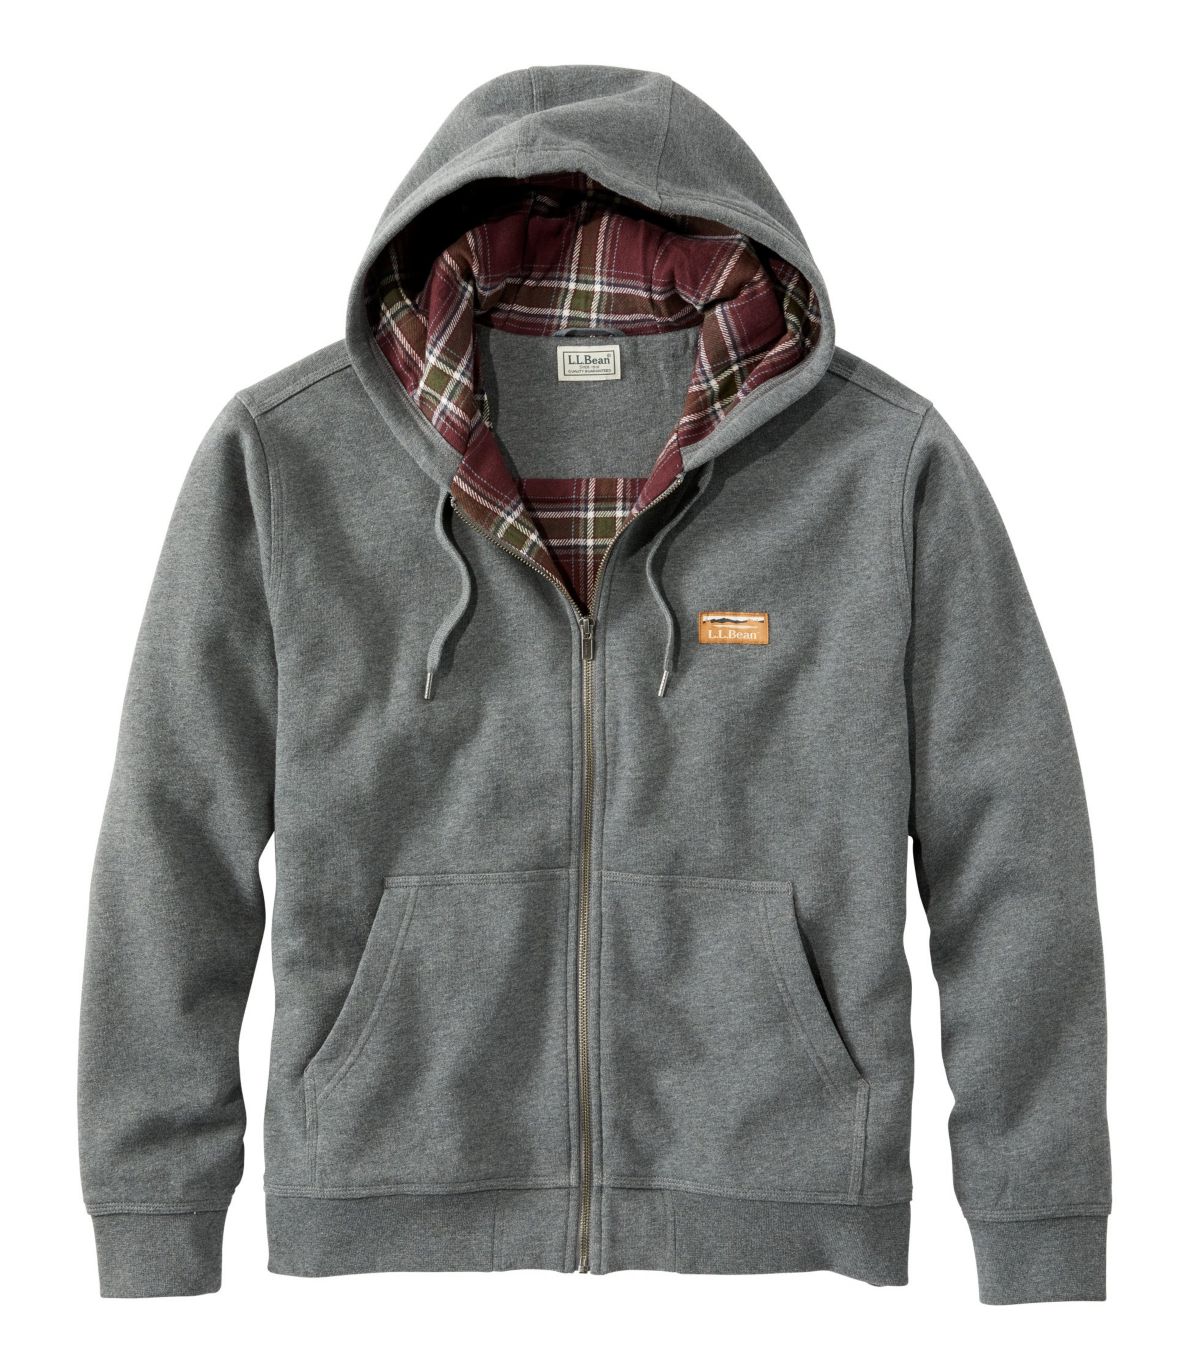 Men's Katahdin Iron Works® Hooded Sweatshirt, Flannel-Lined